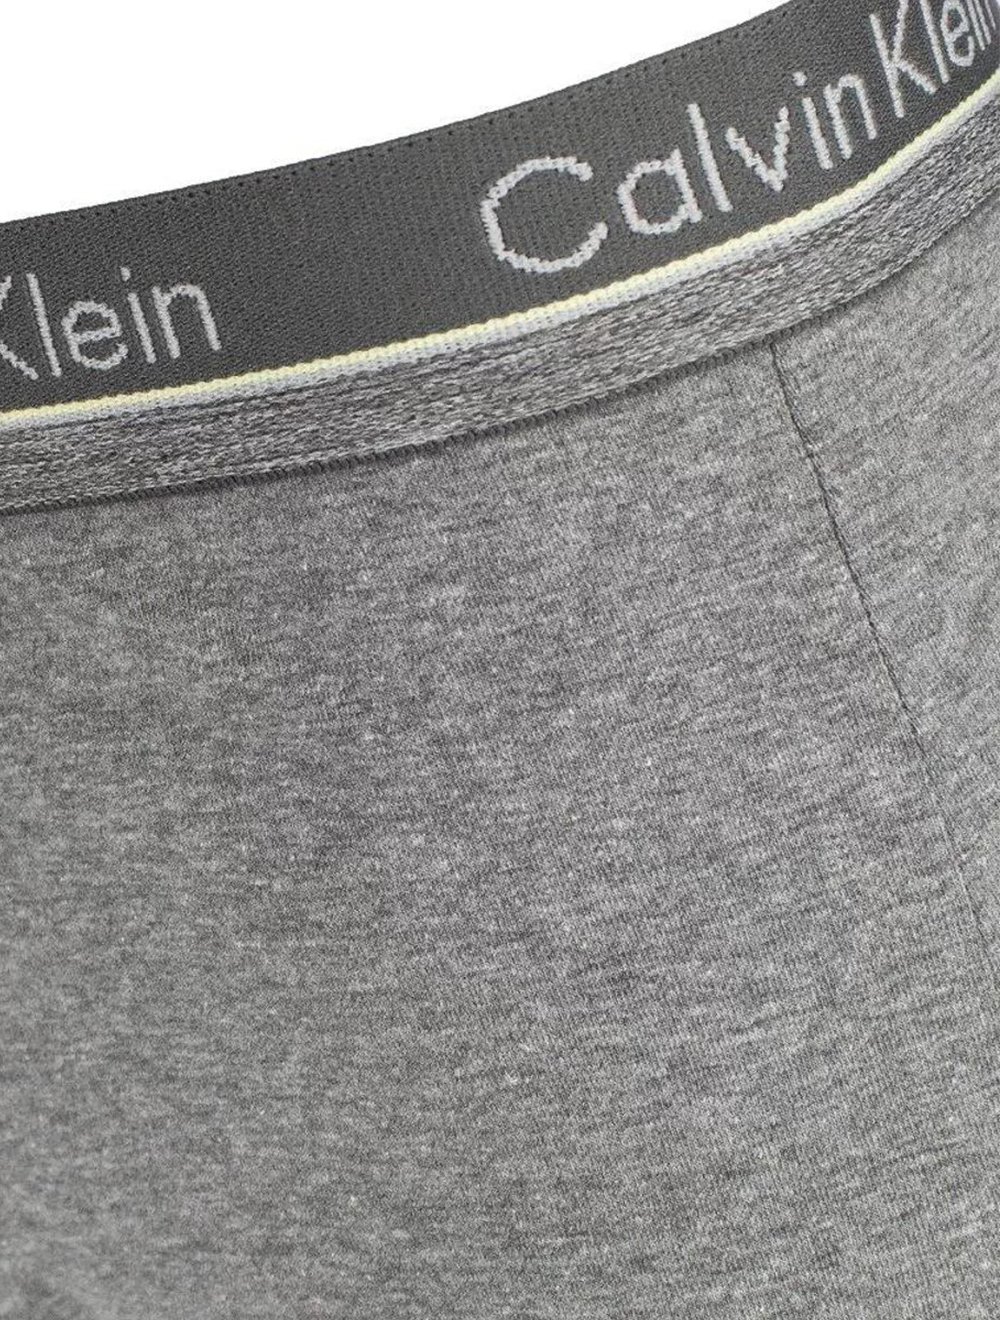 Cueca Low Rise Trunk Algodão - Calvin Klein Underwear - Cinza